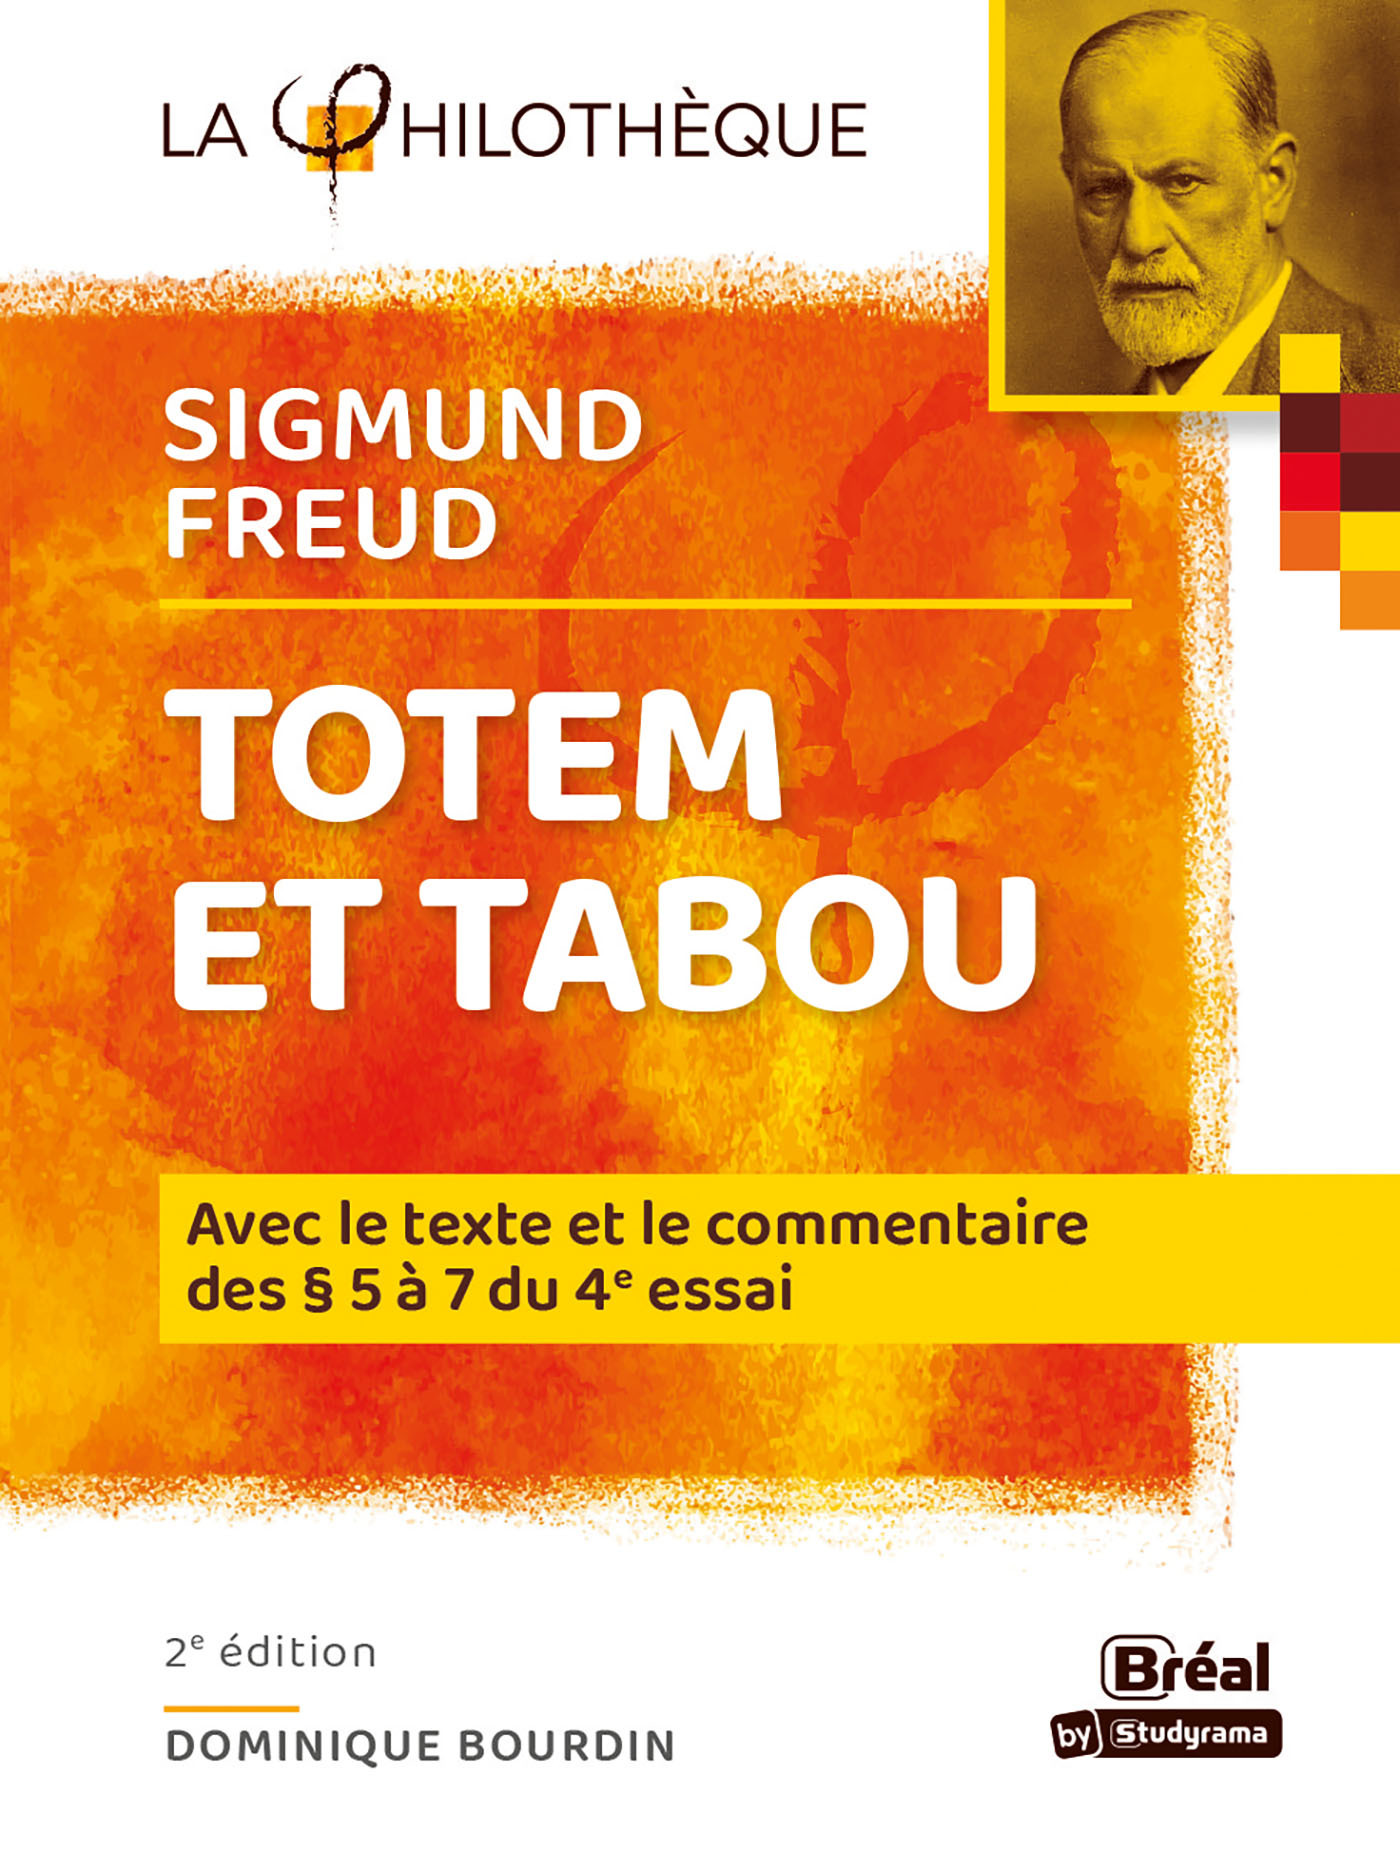 Totem et Tabou Sigmund Freud, 2e édition (9782749550237-front-cover)